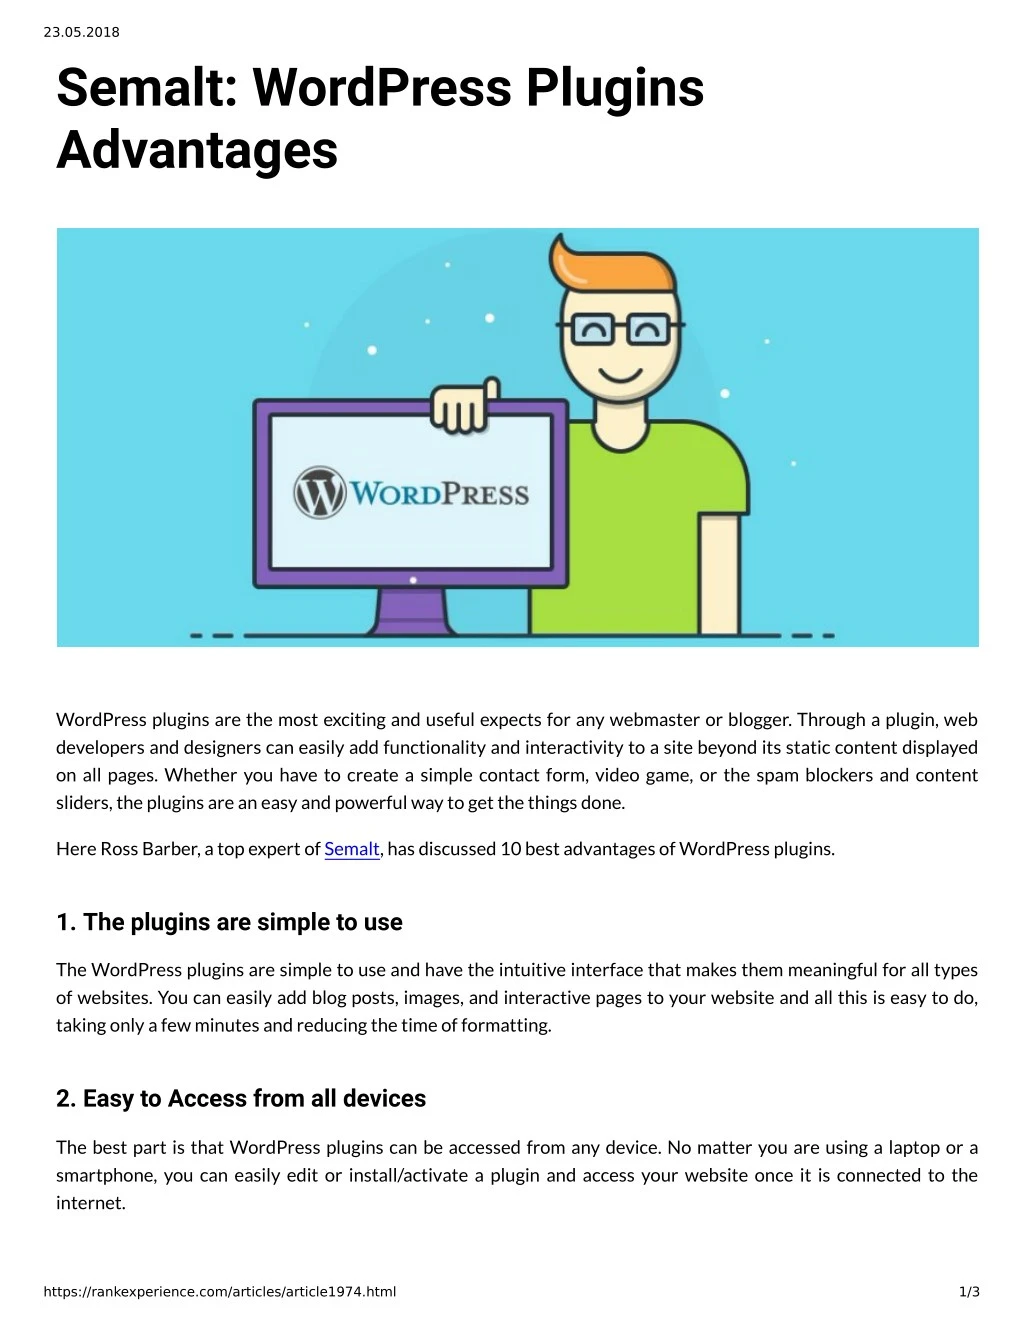 23 05 2018 semalt wordpress plugins advantages